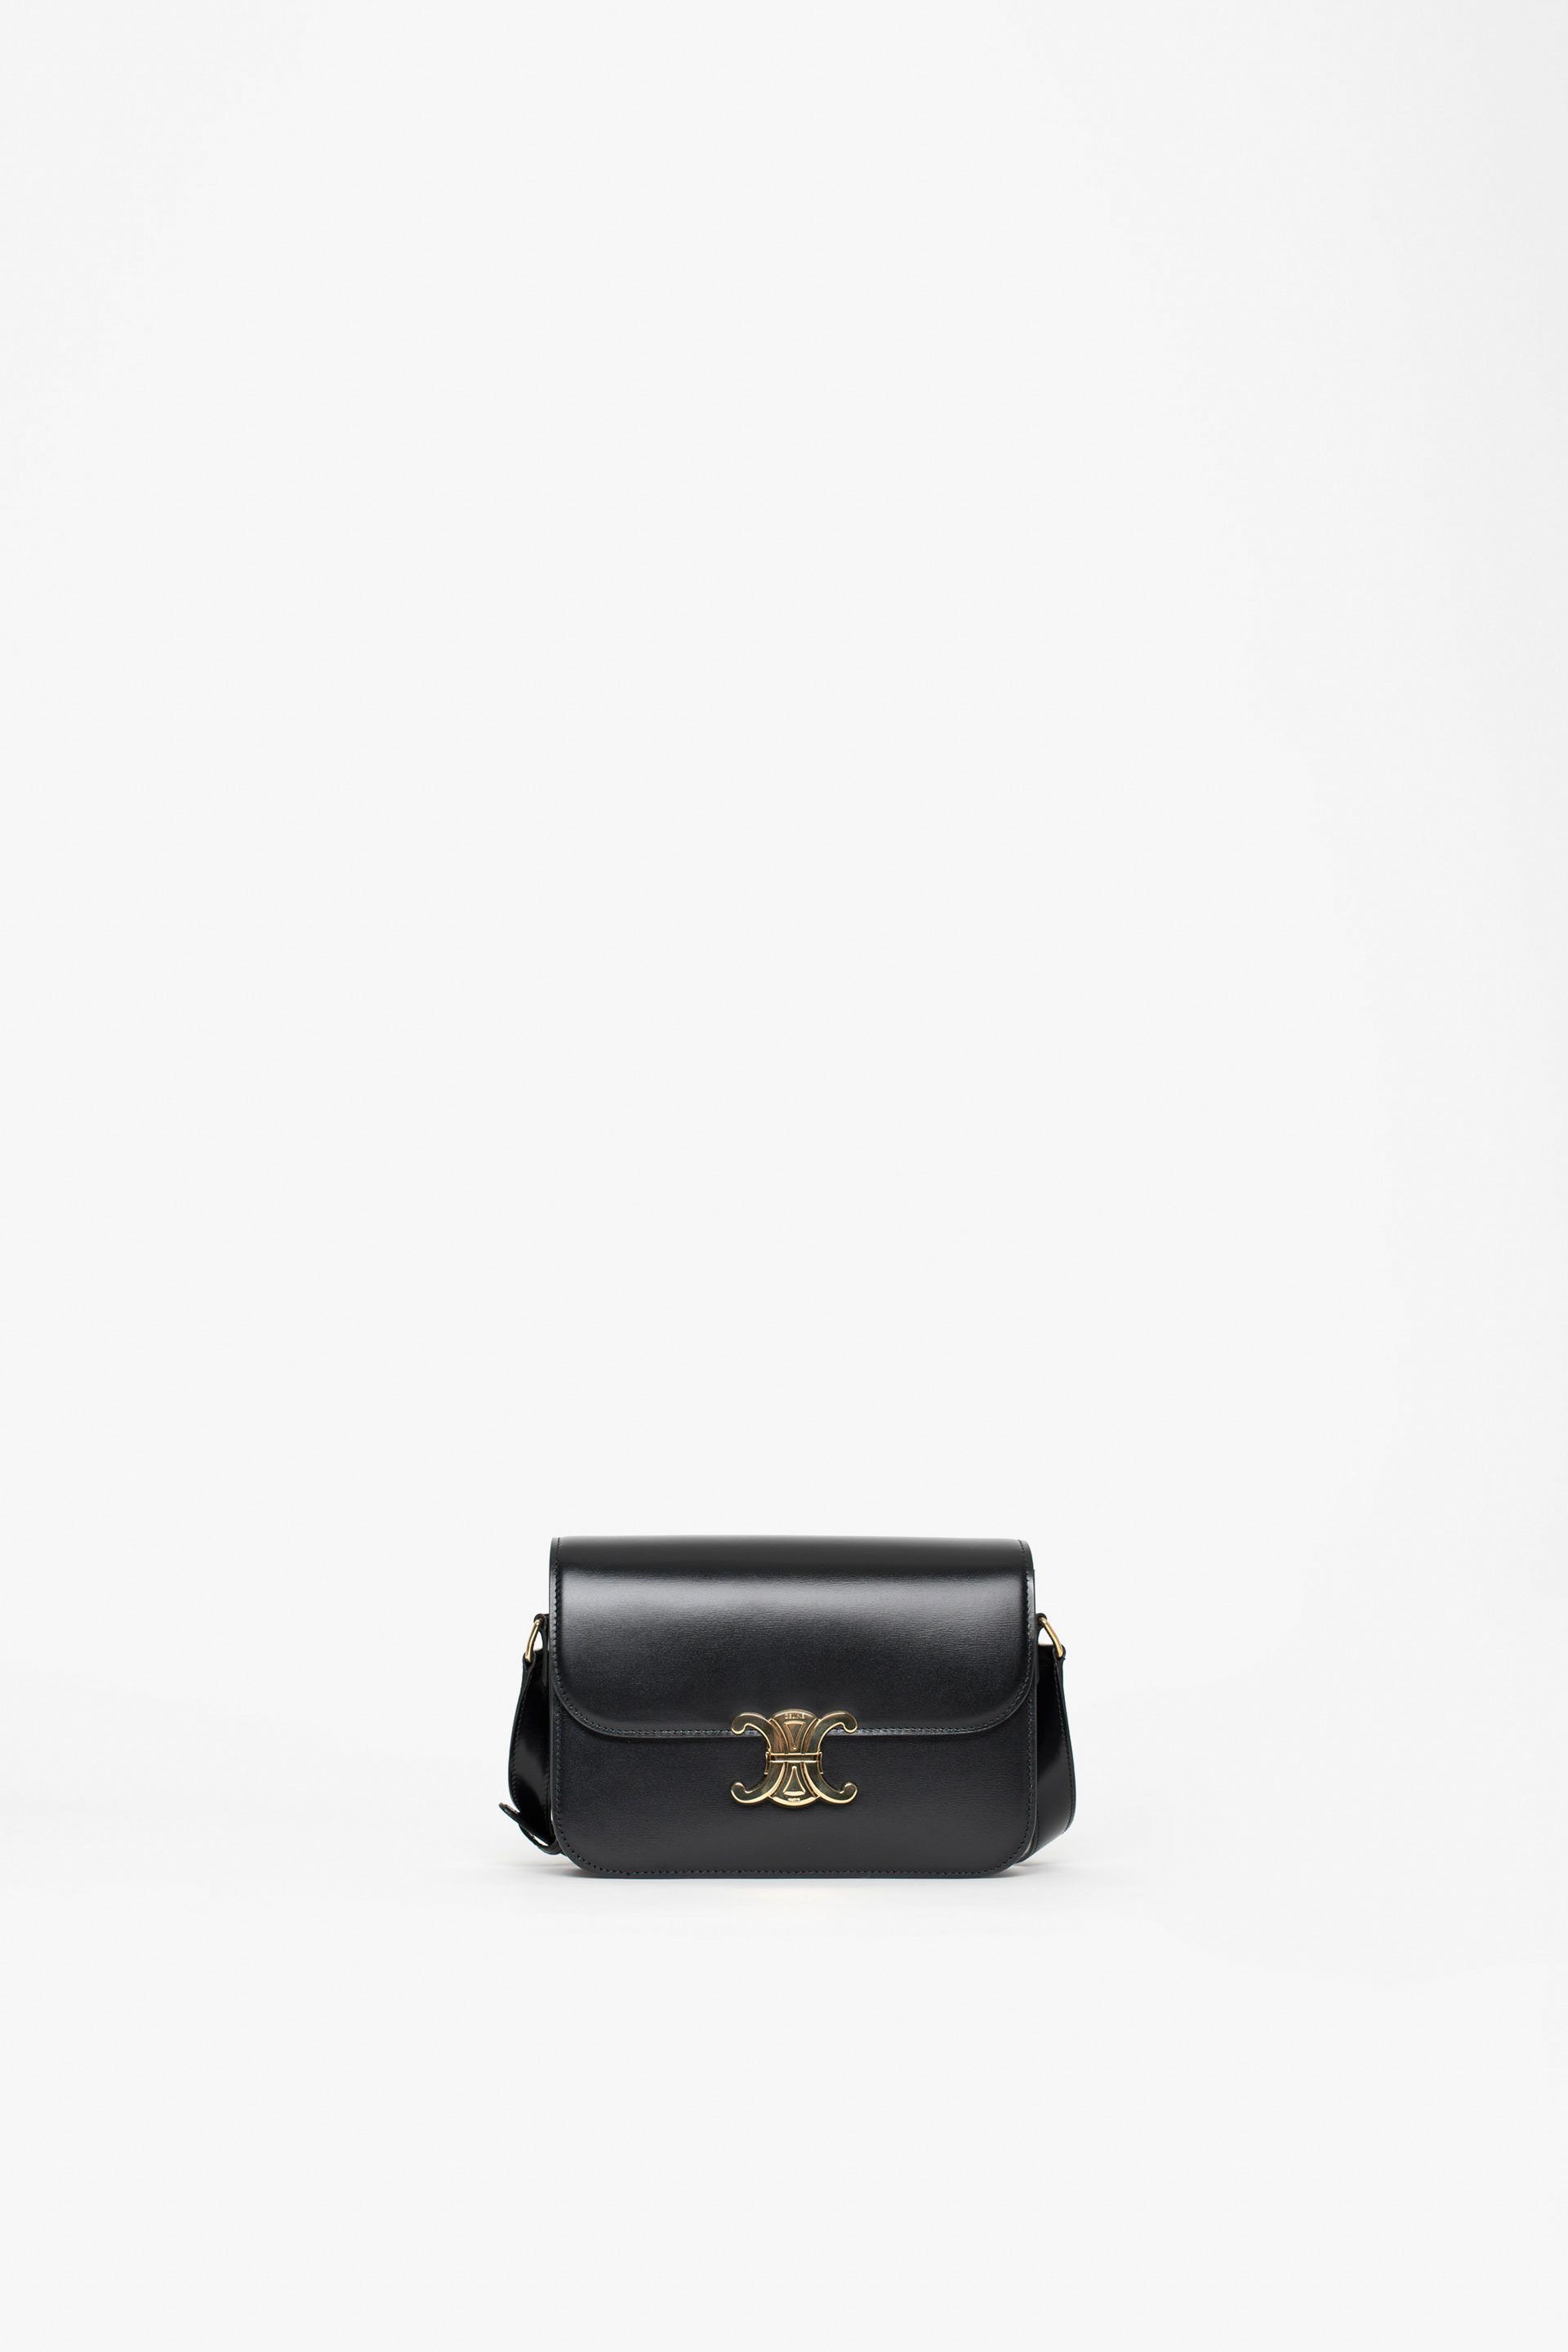 Celine Triomphe Small Bag in Black | Lyst